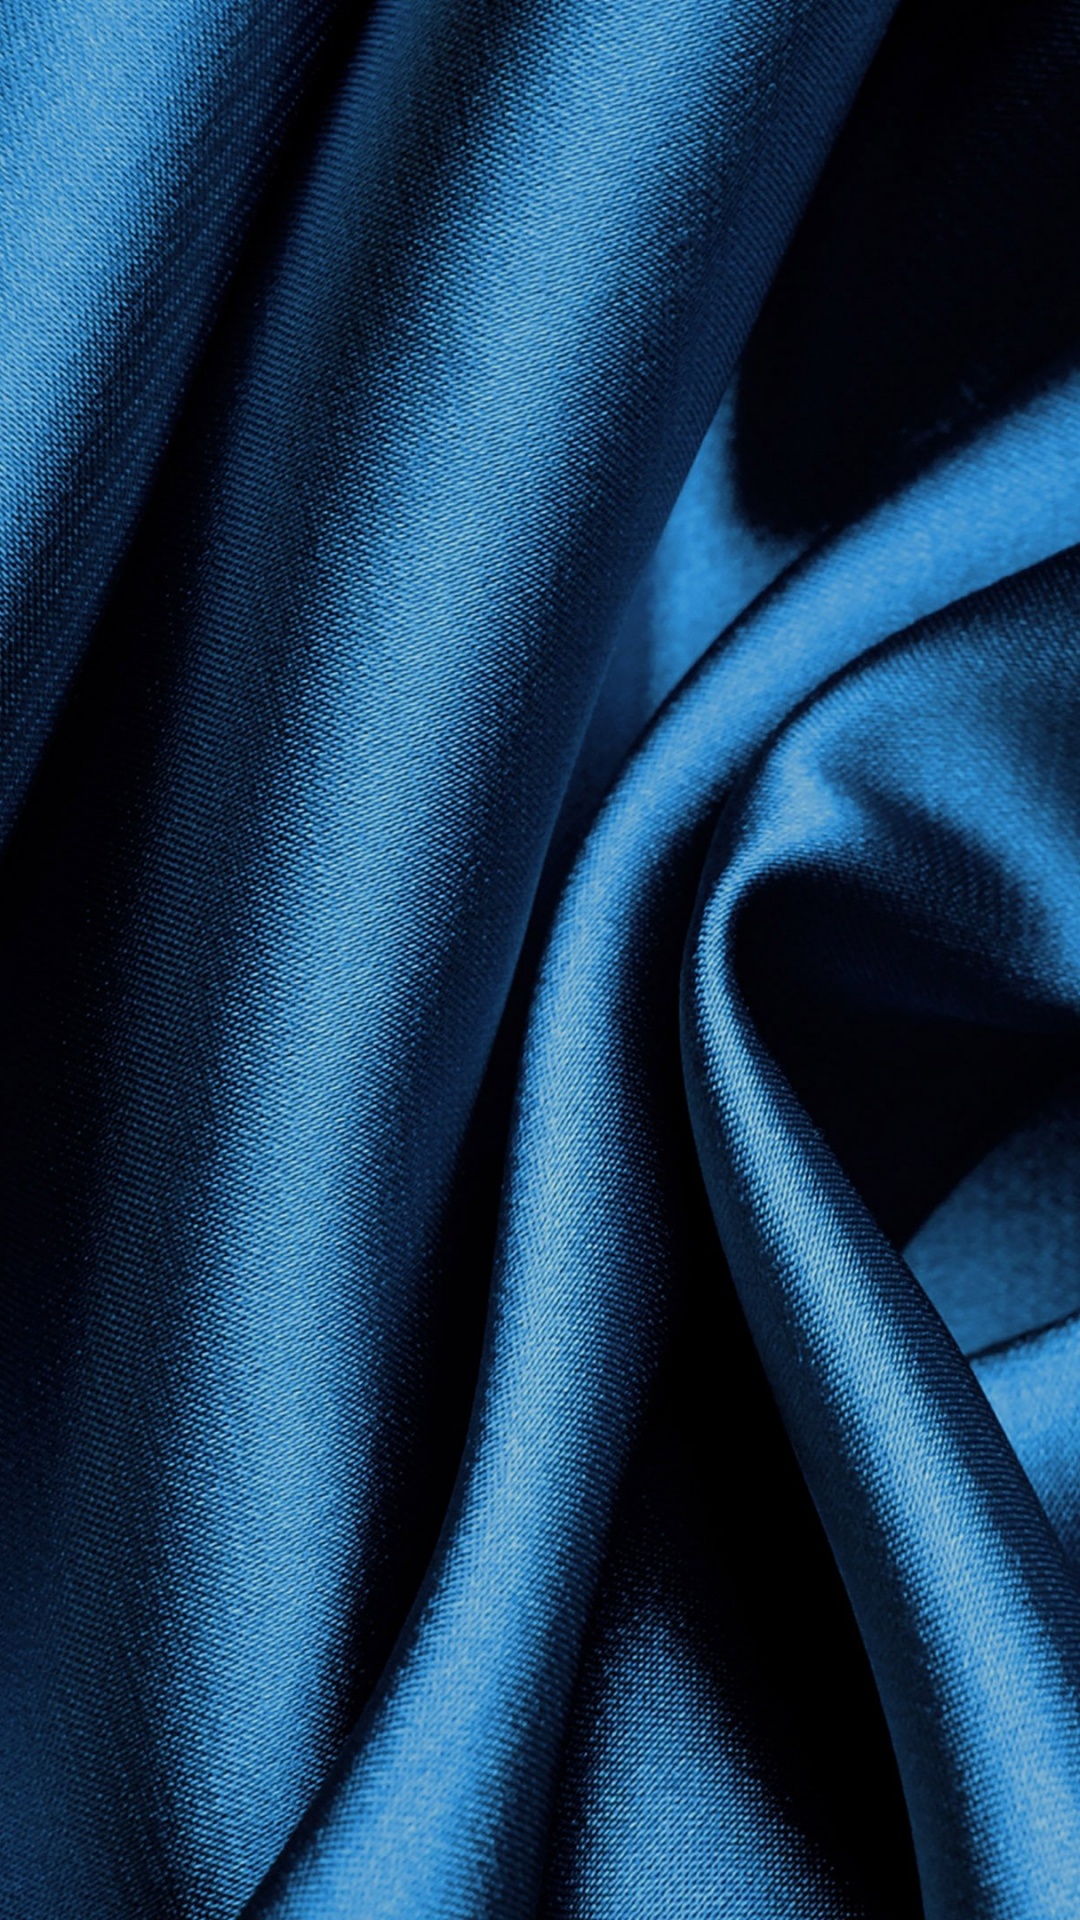 Textile Bleu en Photographie Rapprochée. Wallpaper in 1080x1920 Resolution